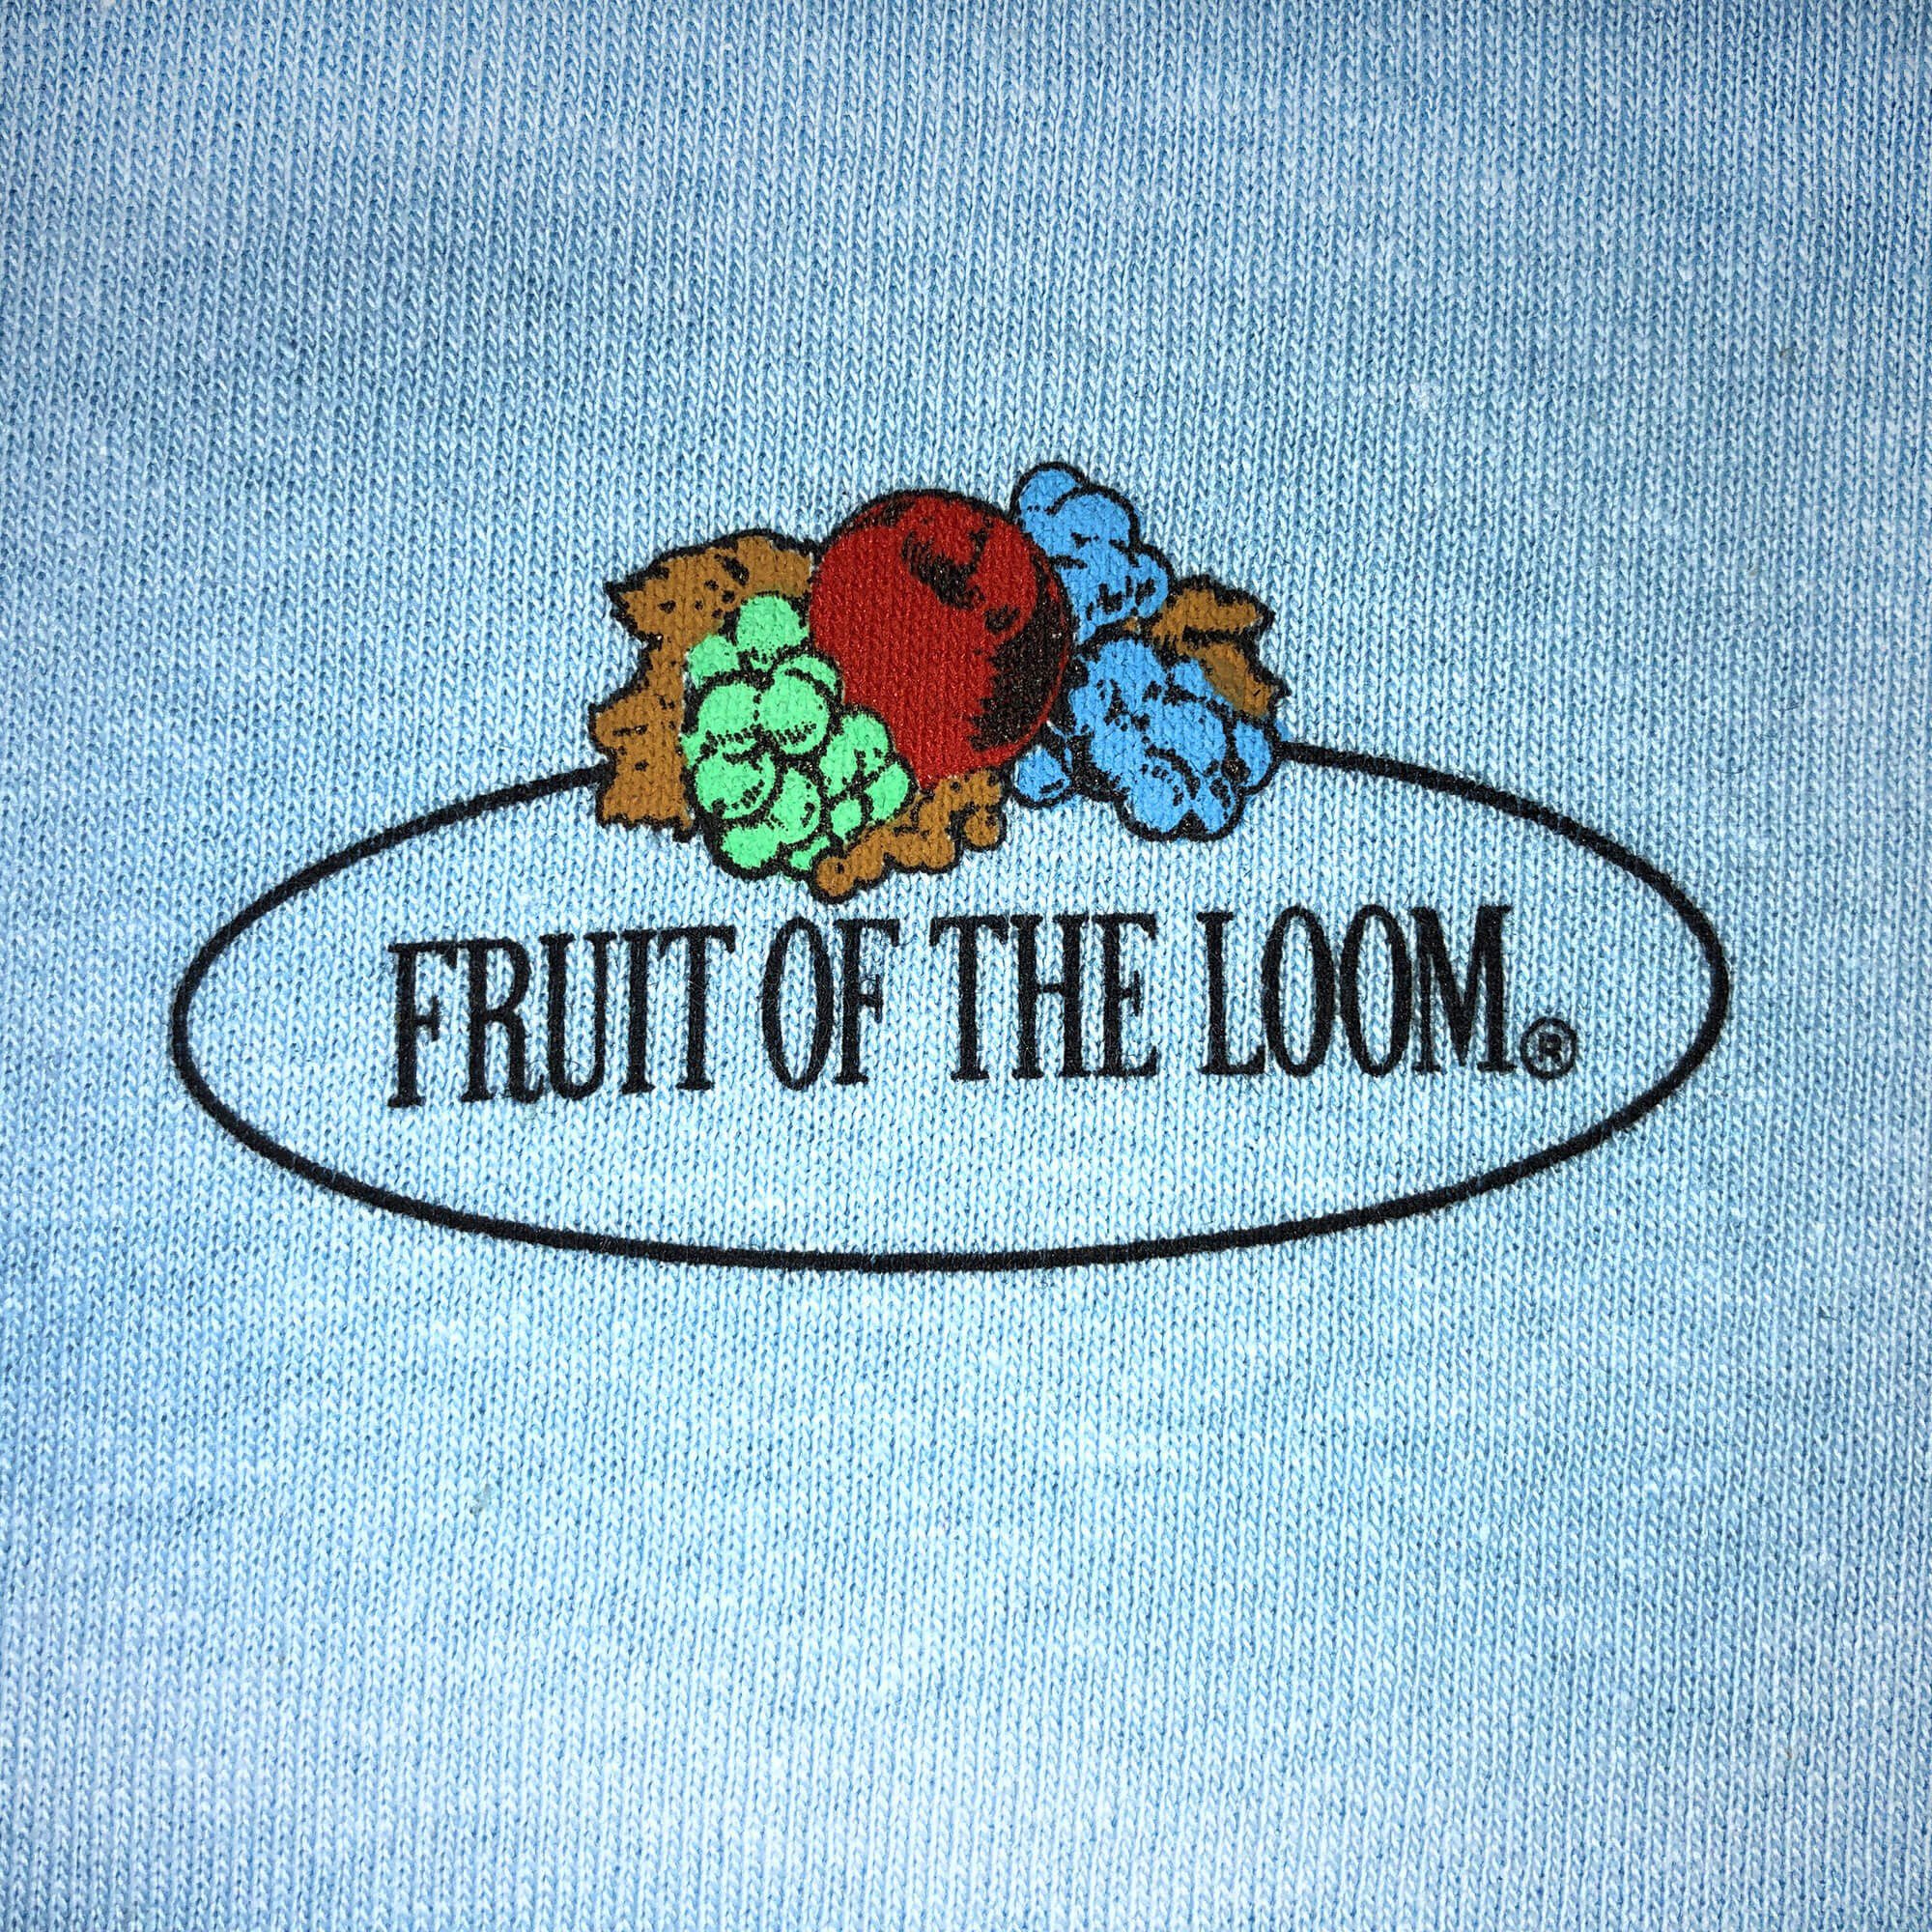 Fruit pastellblau the mit Loom Vintage-Logo Damen T-Shirt Rundhalsshirt of